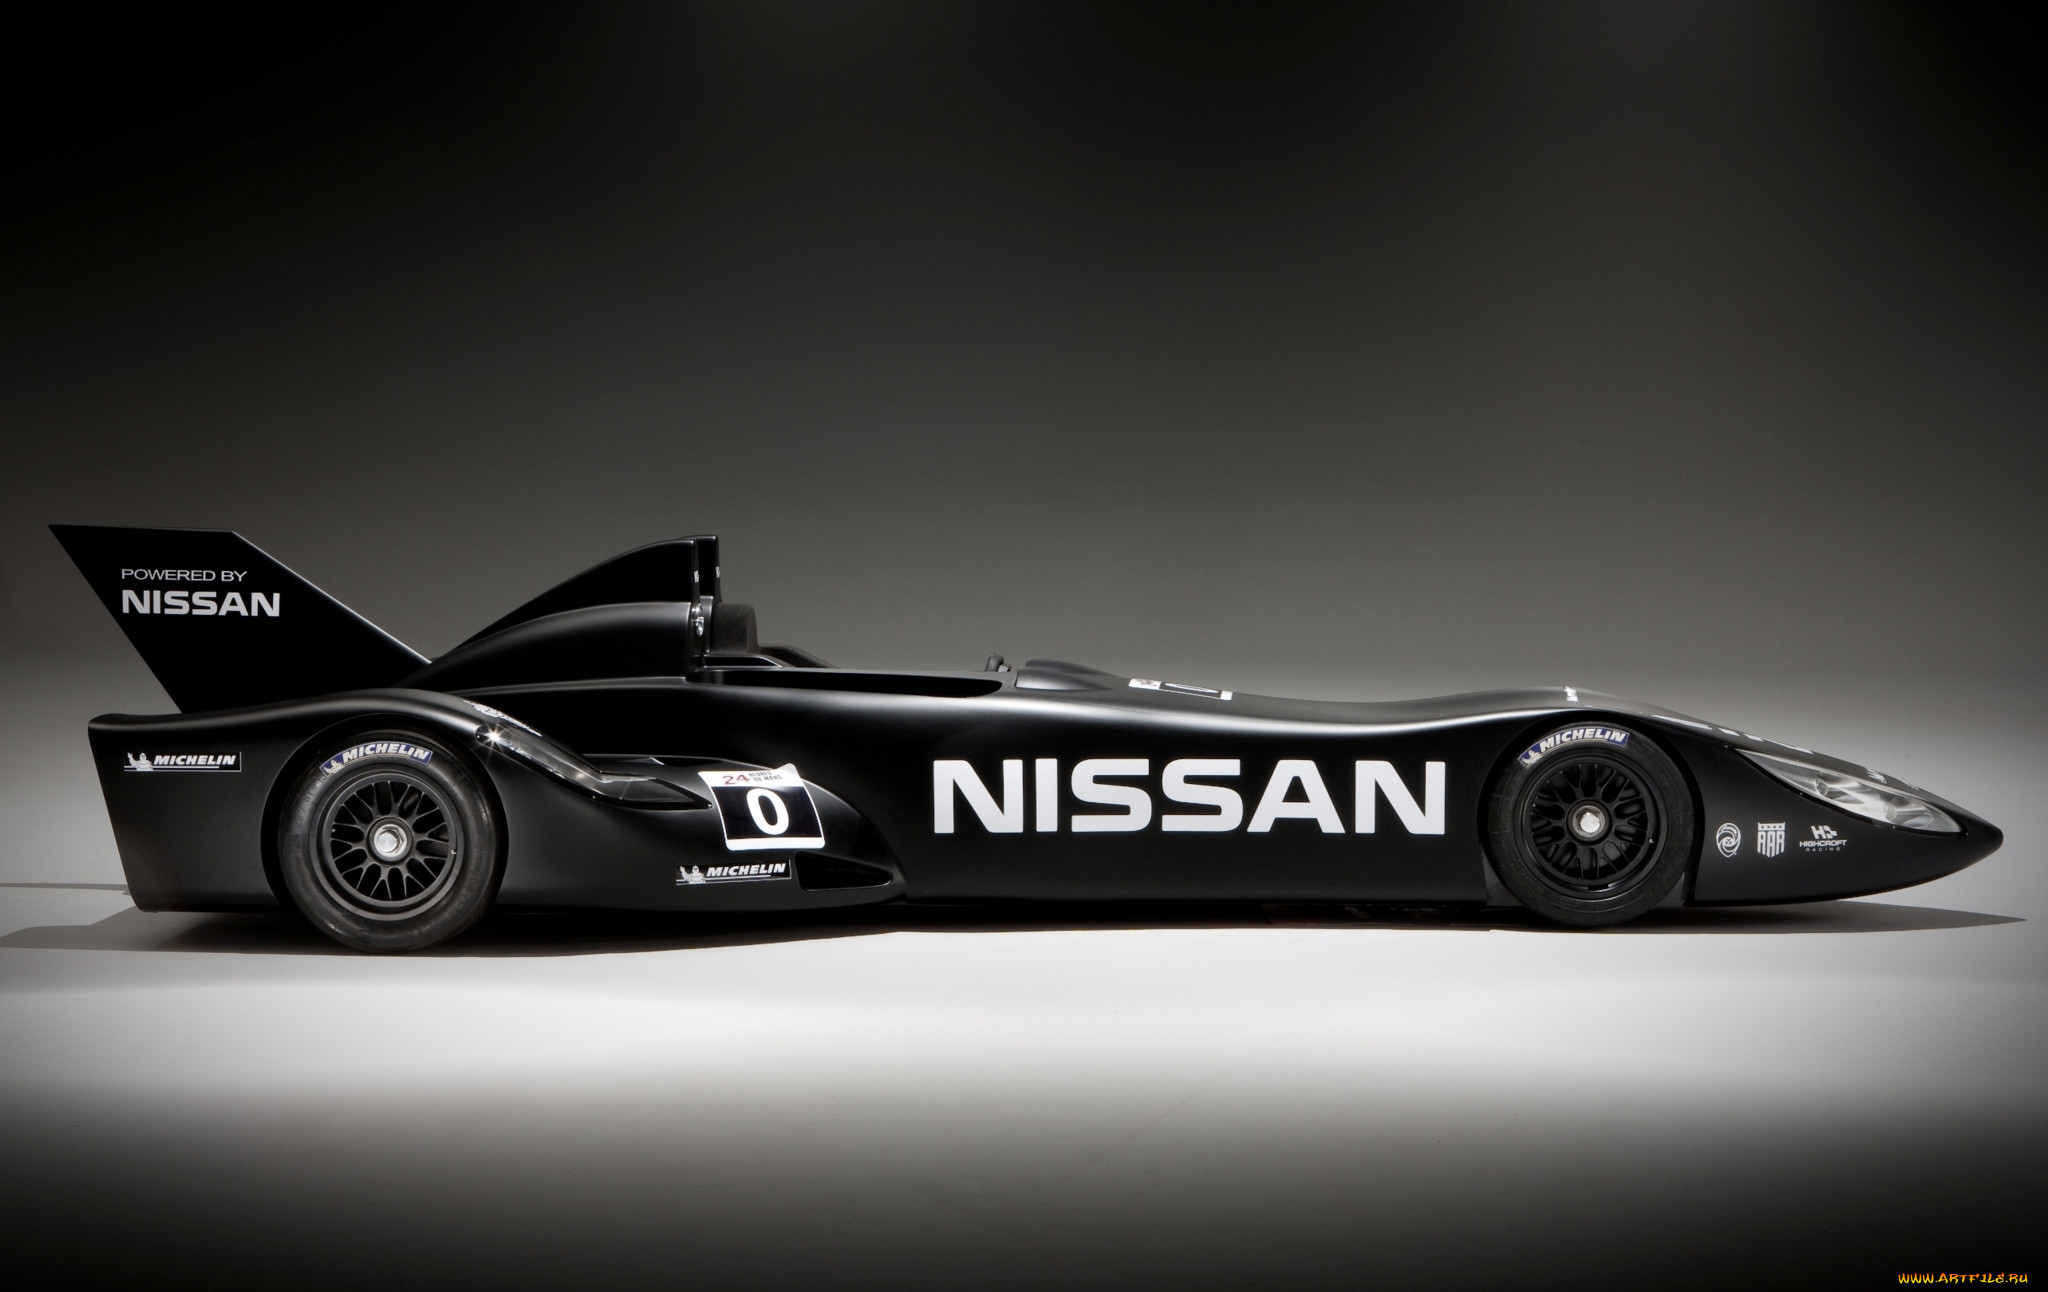 nissan deltawing experimental race car 2012, , nissan, datsun, 2012, deltawing, experimental, race, car